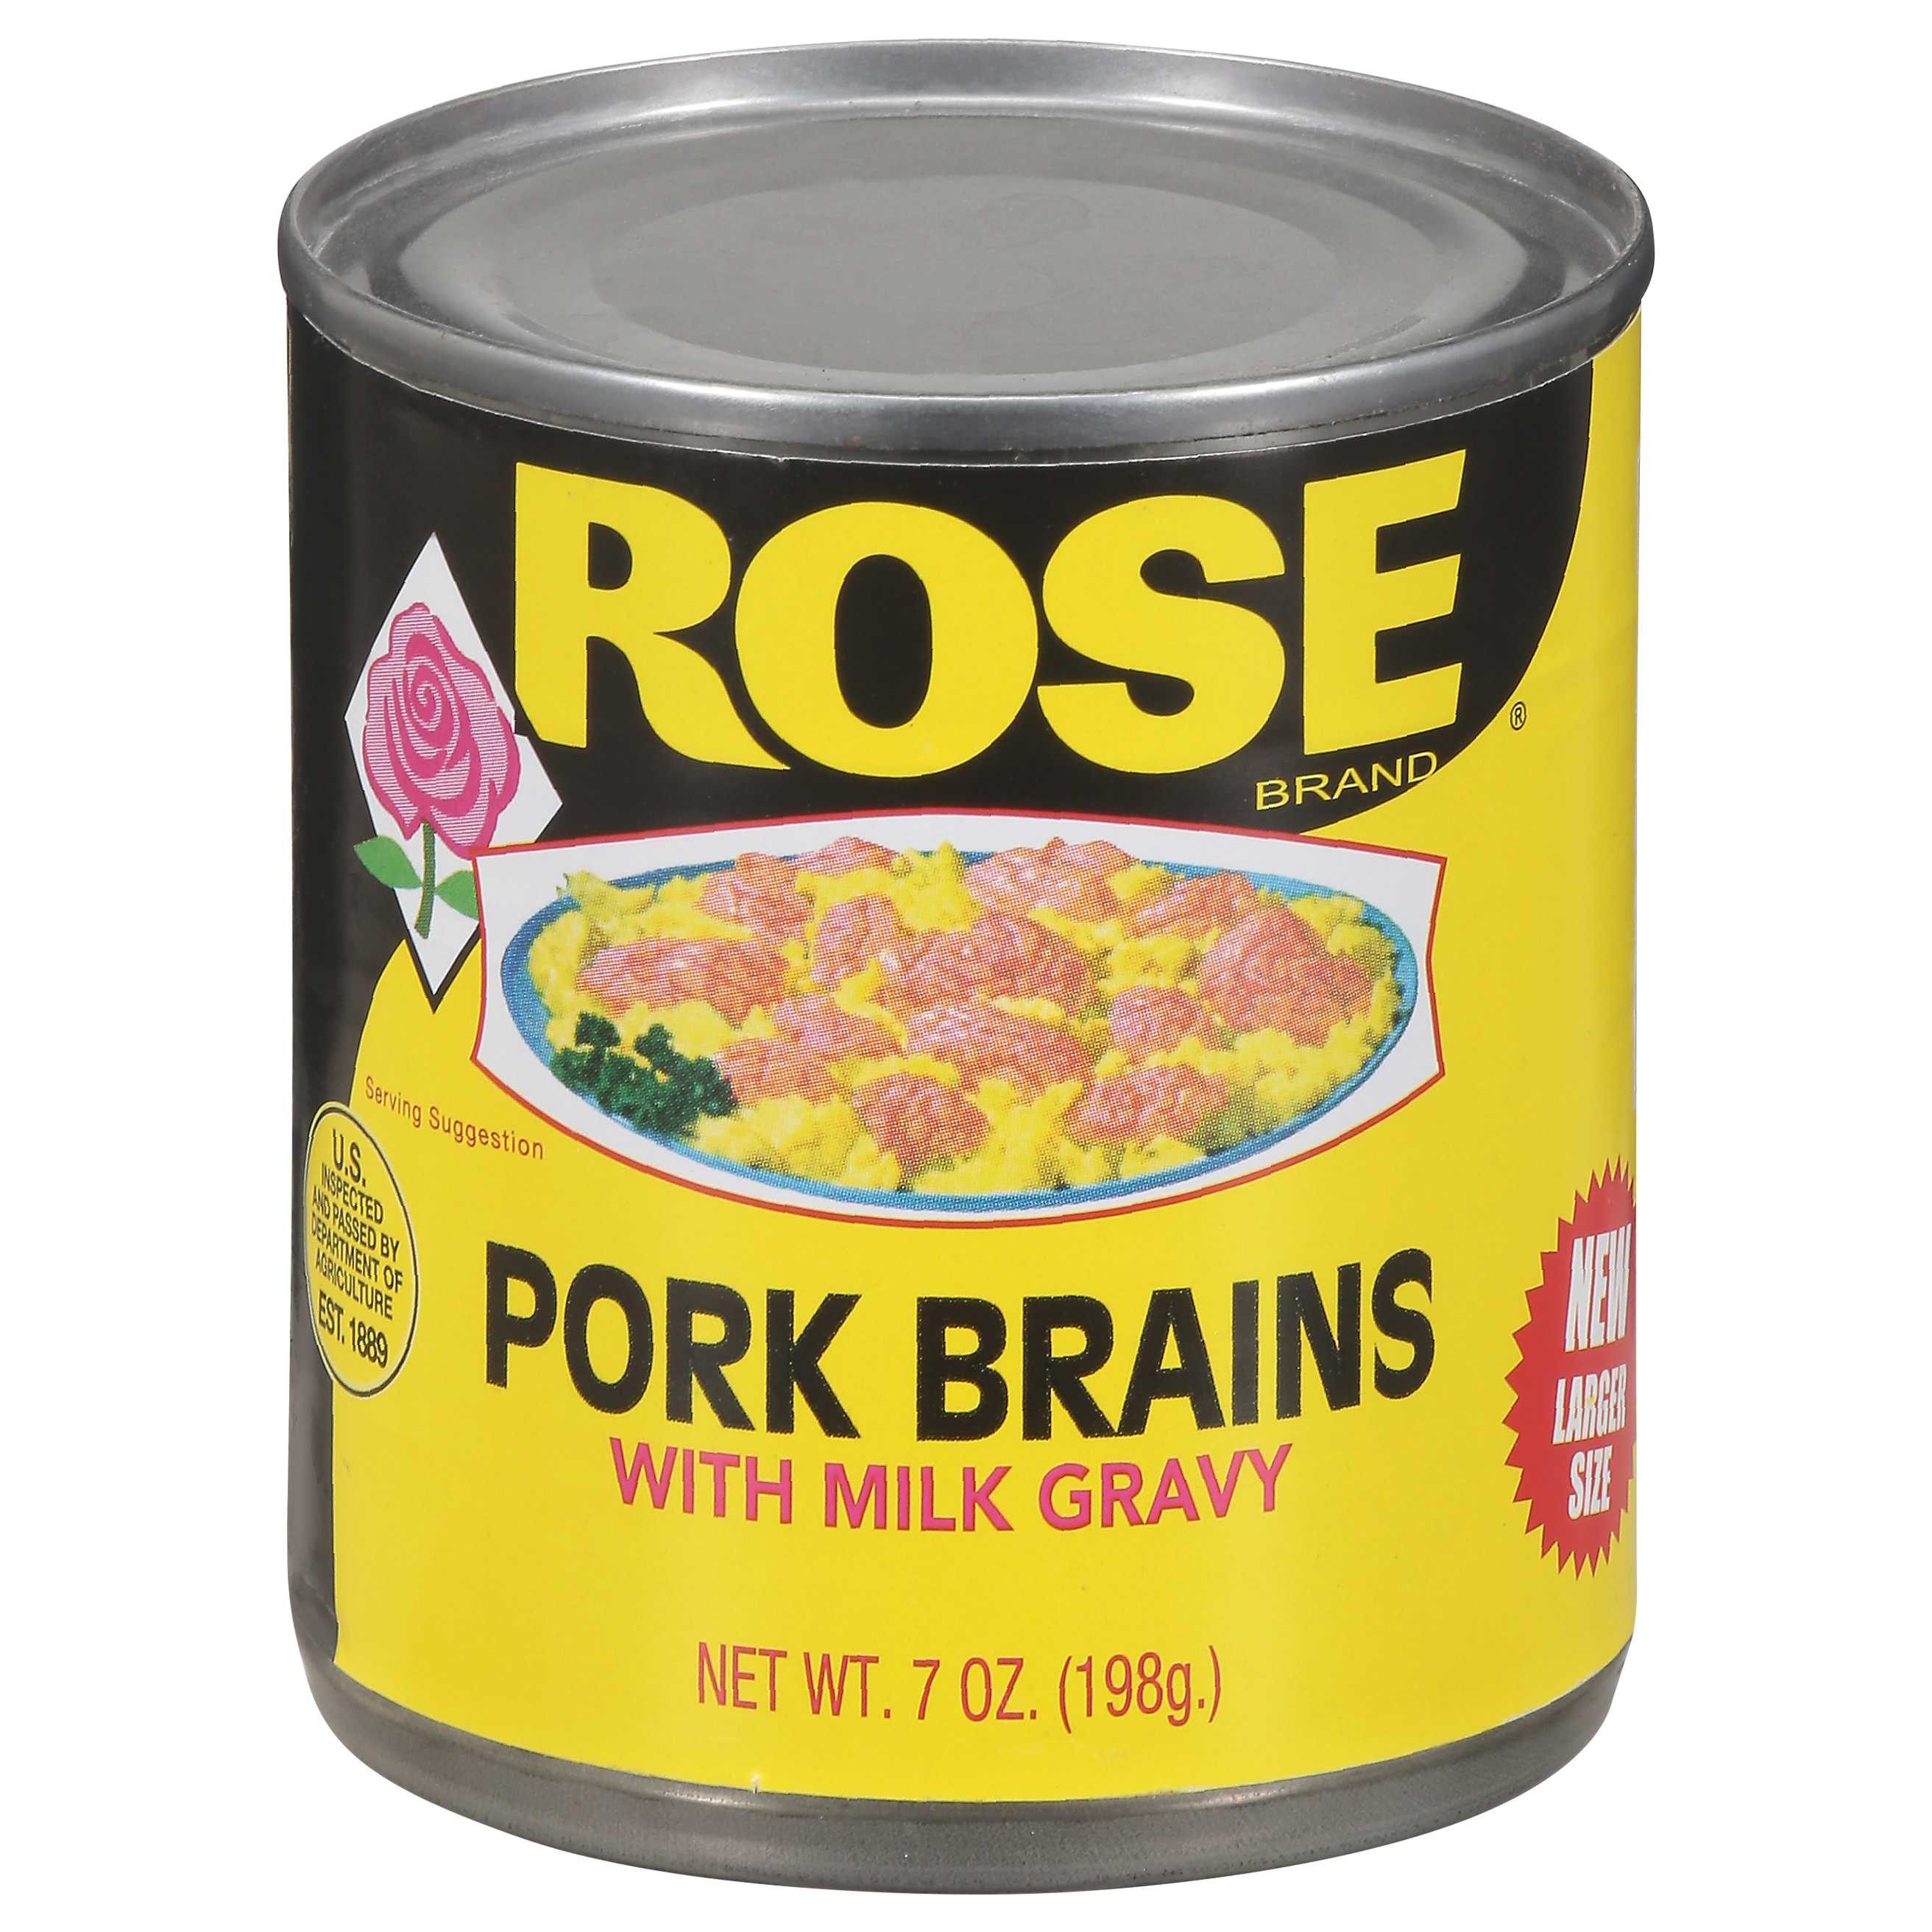 Where can i buy rose pork brains